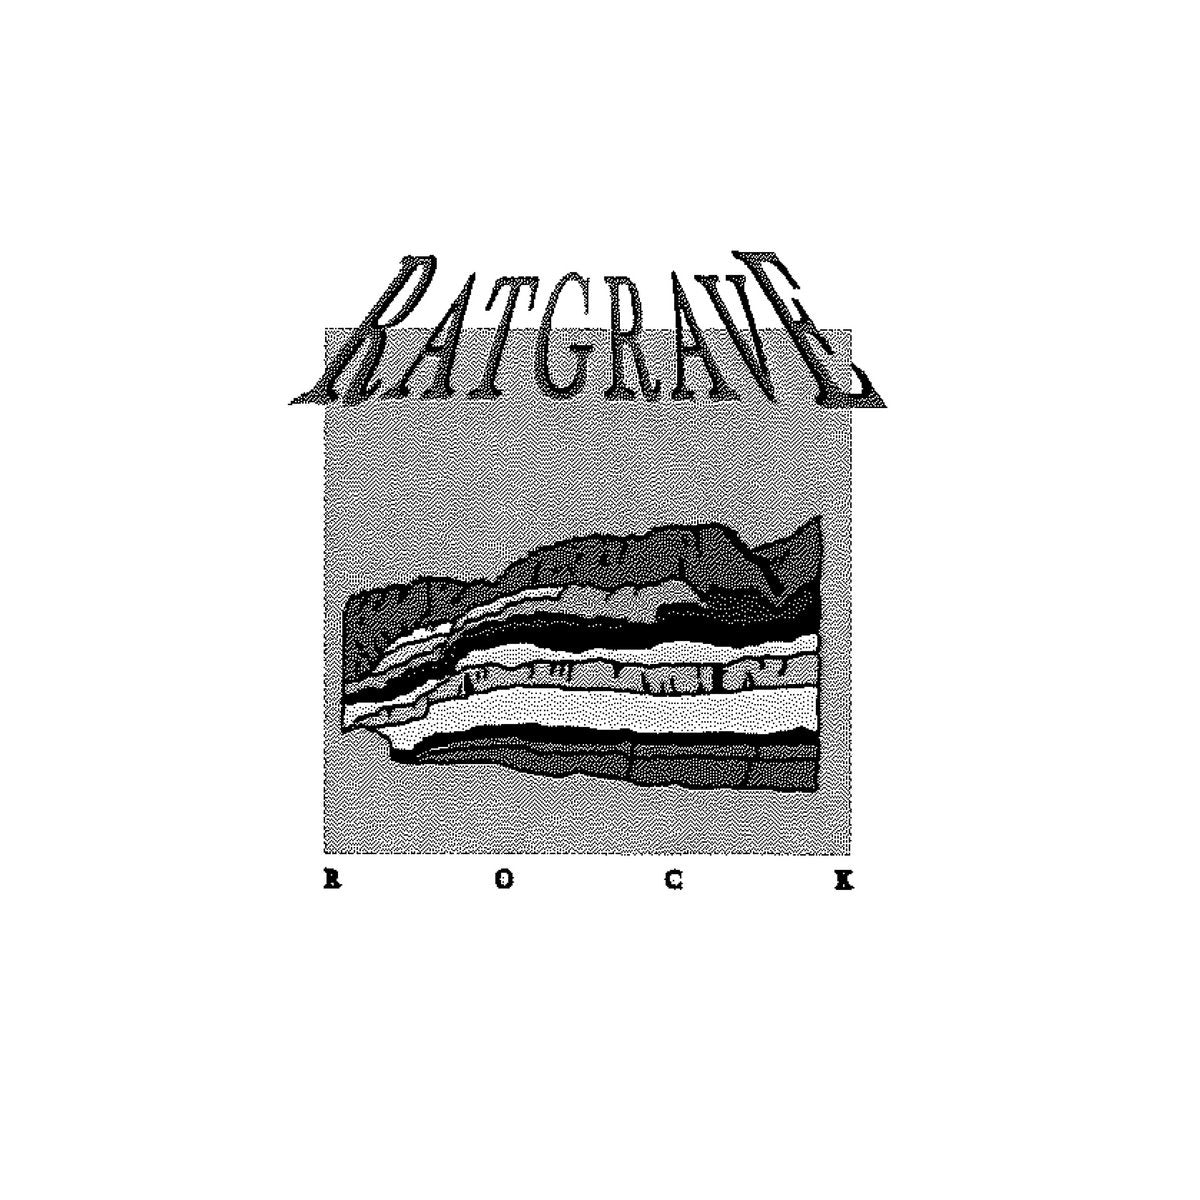 RATGRAVE – Rock - New LP Record 2020 Black Focus Vinyl - Electronic / Jazz / Fusion